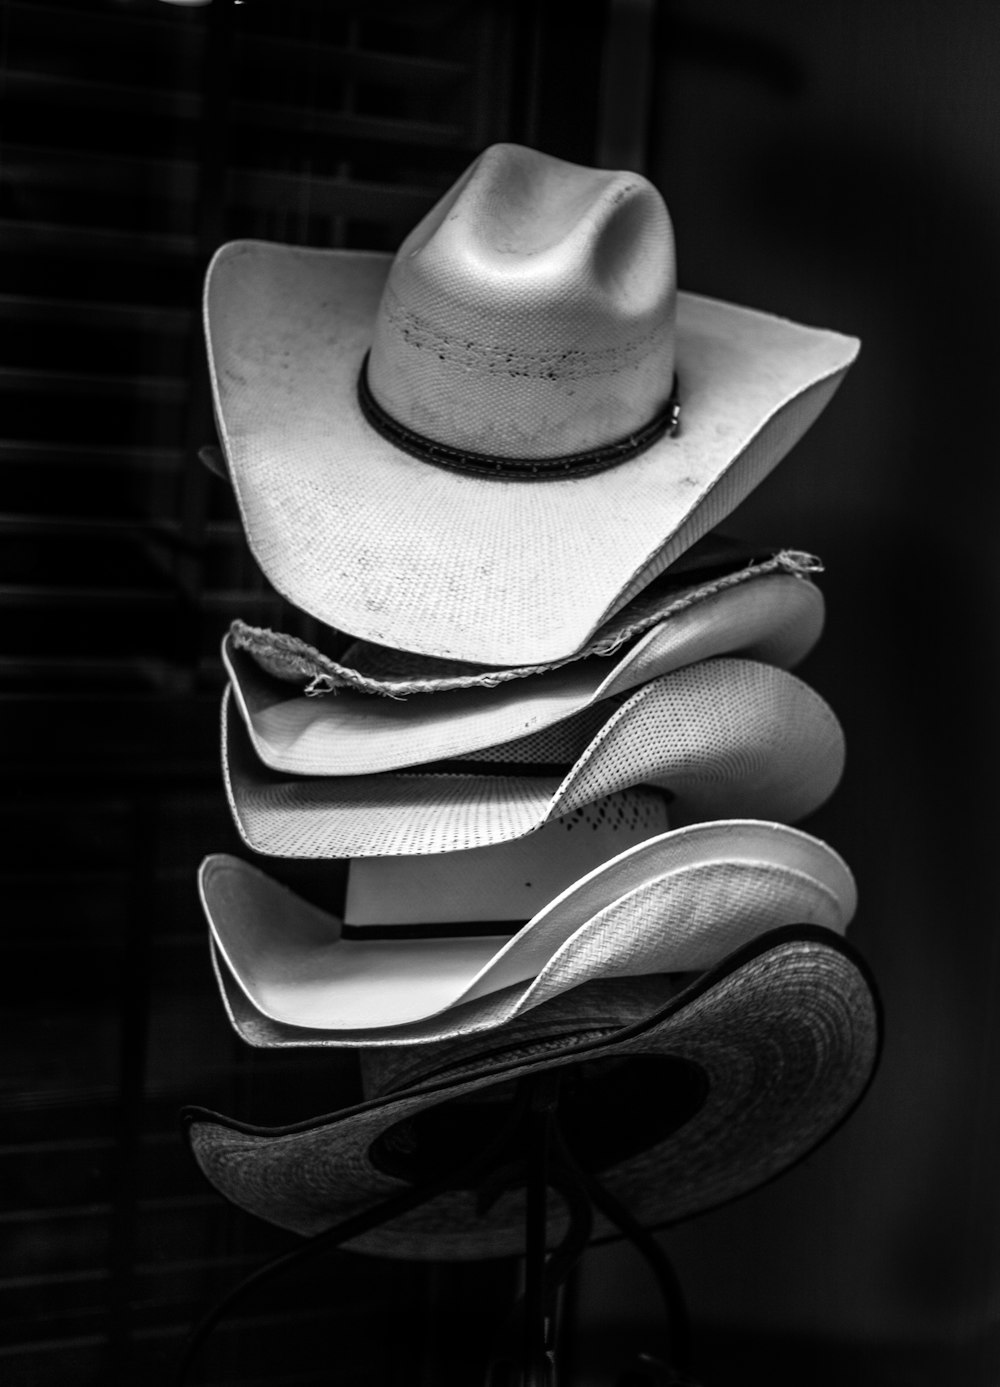 Sombrero de Vaquero Texas para adulto